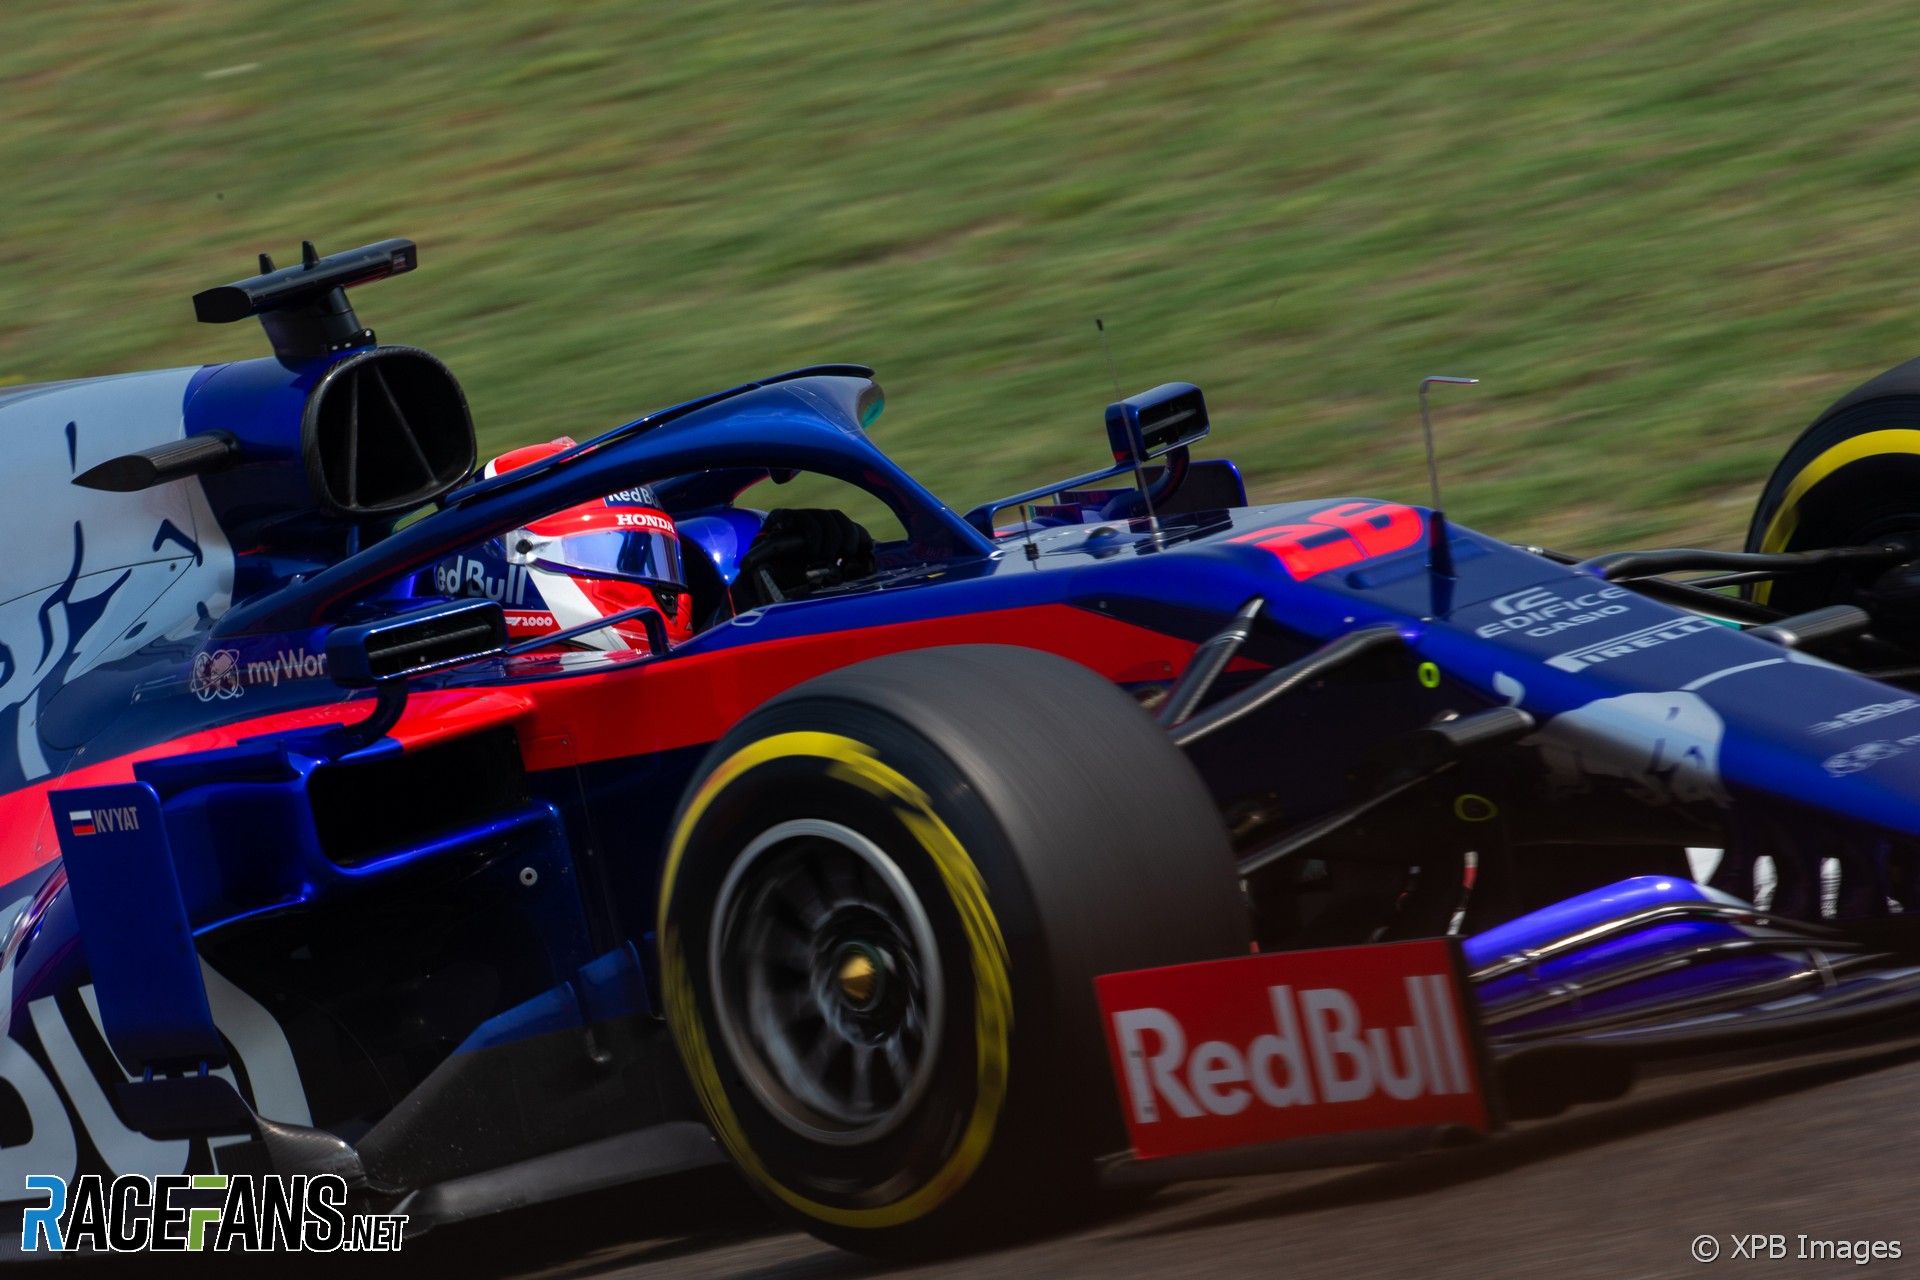 Daniil Kvyat, Toro Rosso, Shanghai International Circuit, 2019